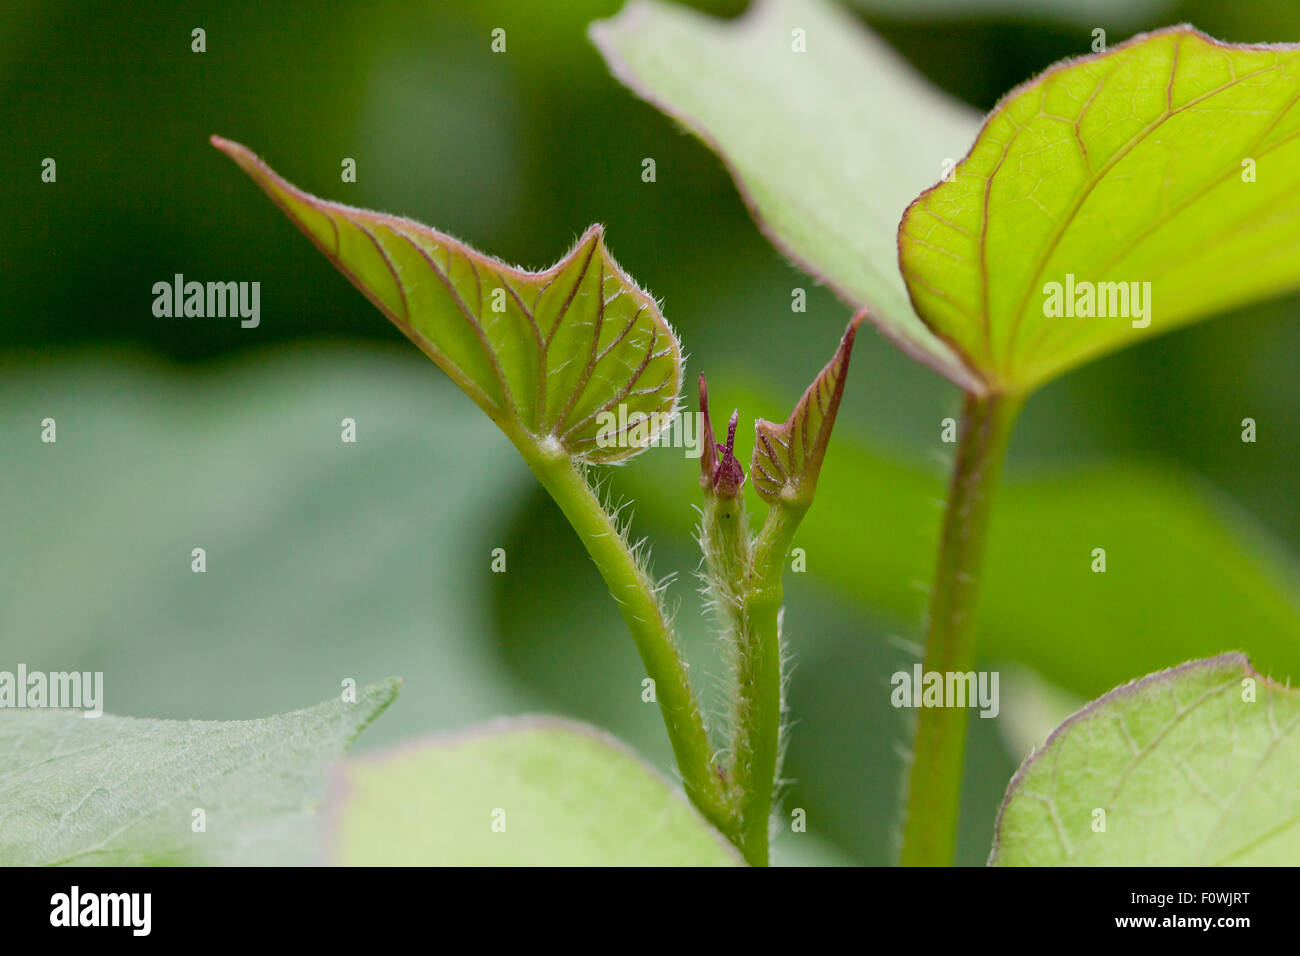 Sweet potato leaves (Ipomoea batatas) Stock Photo